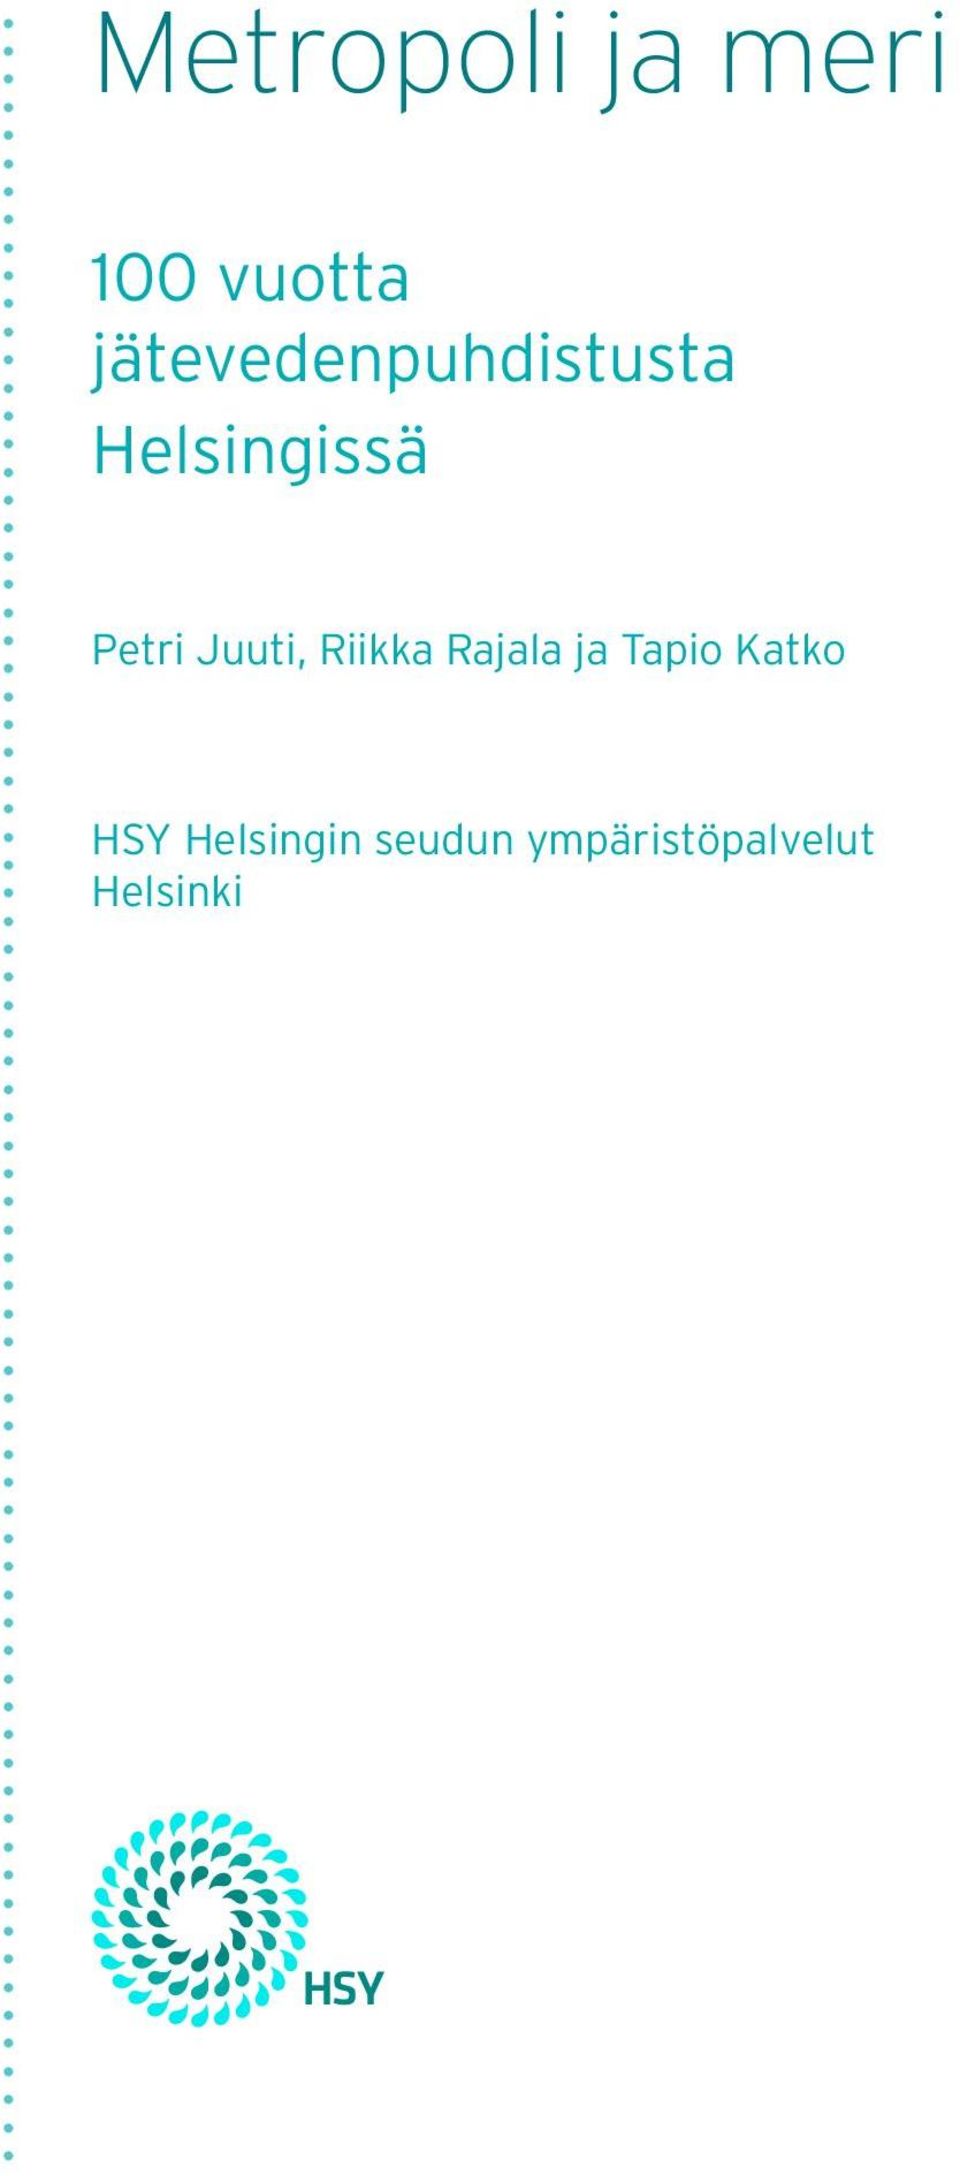 Juuti, Riikka Rajala ja Tapio Katko